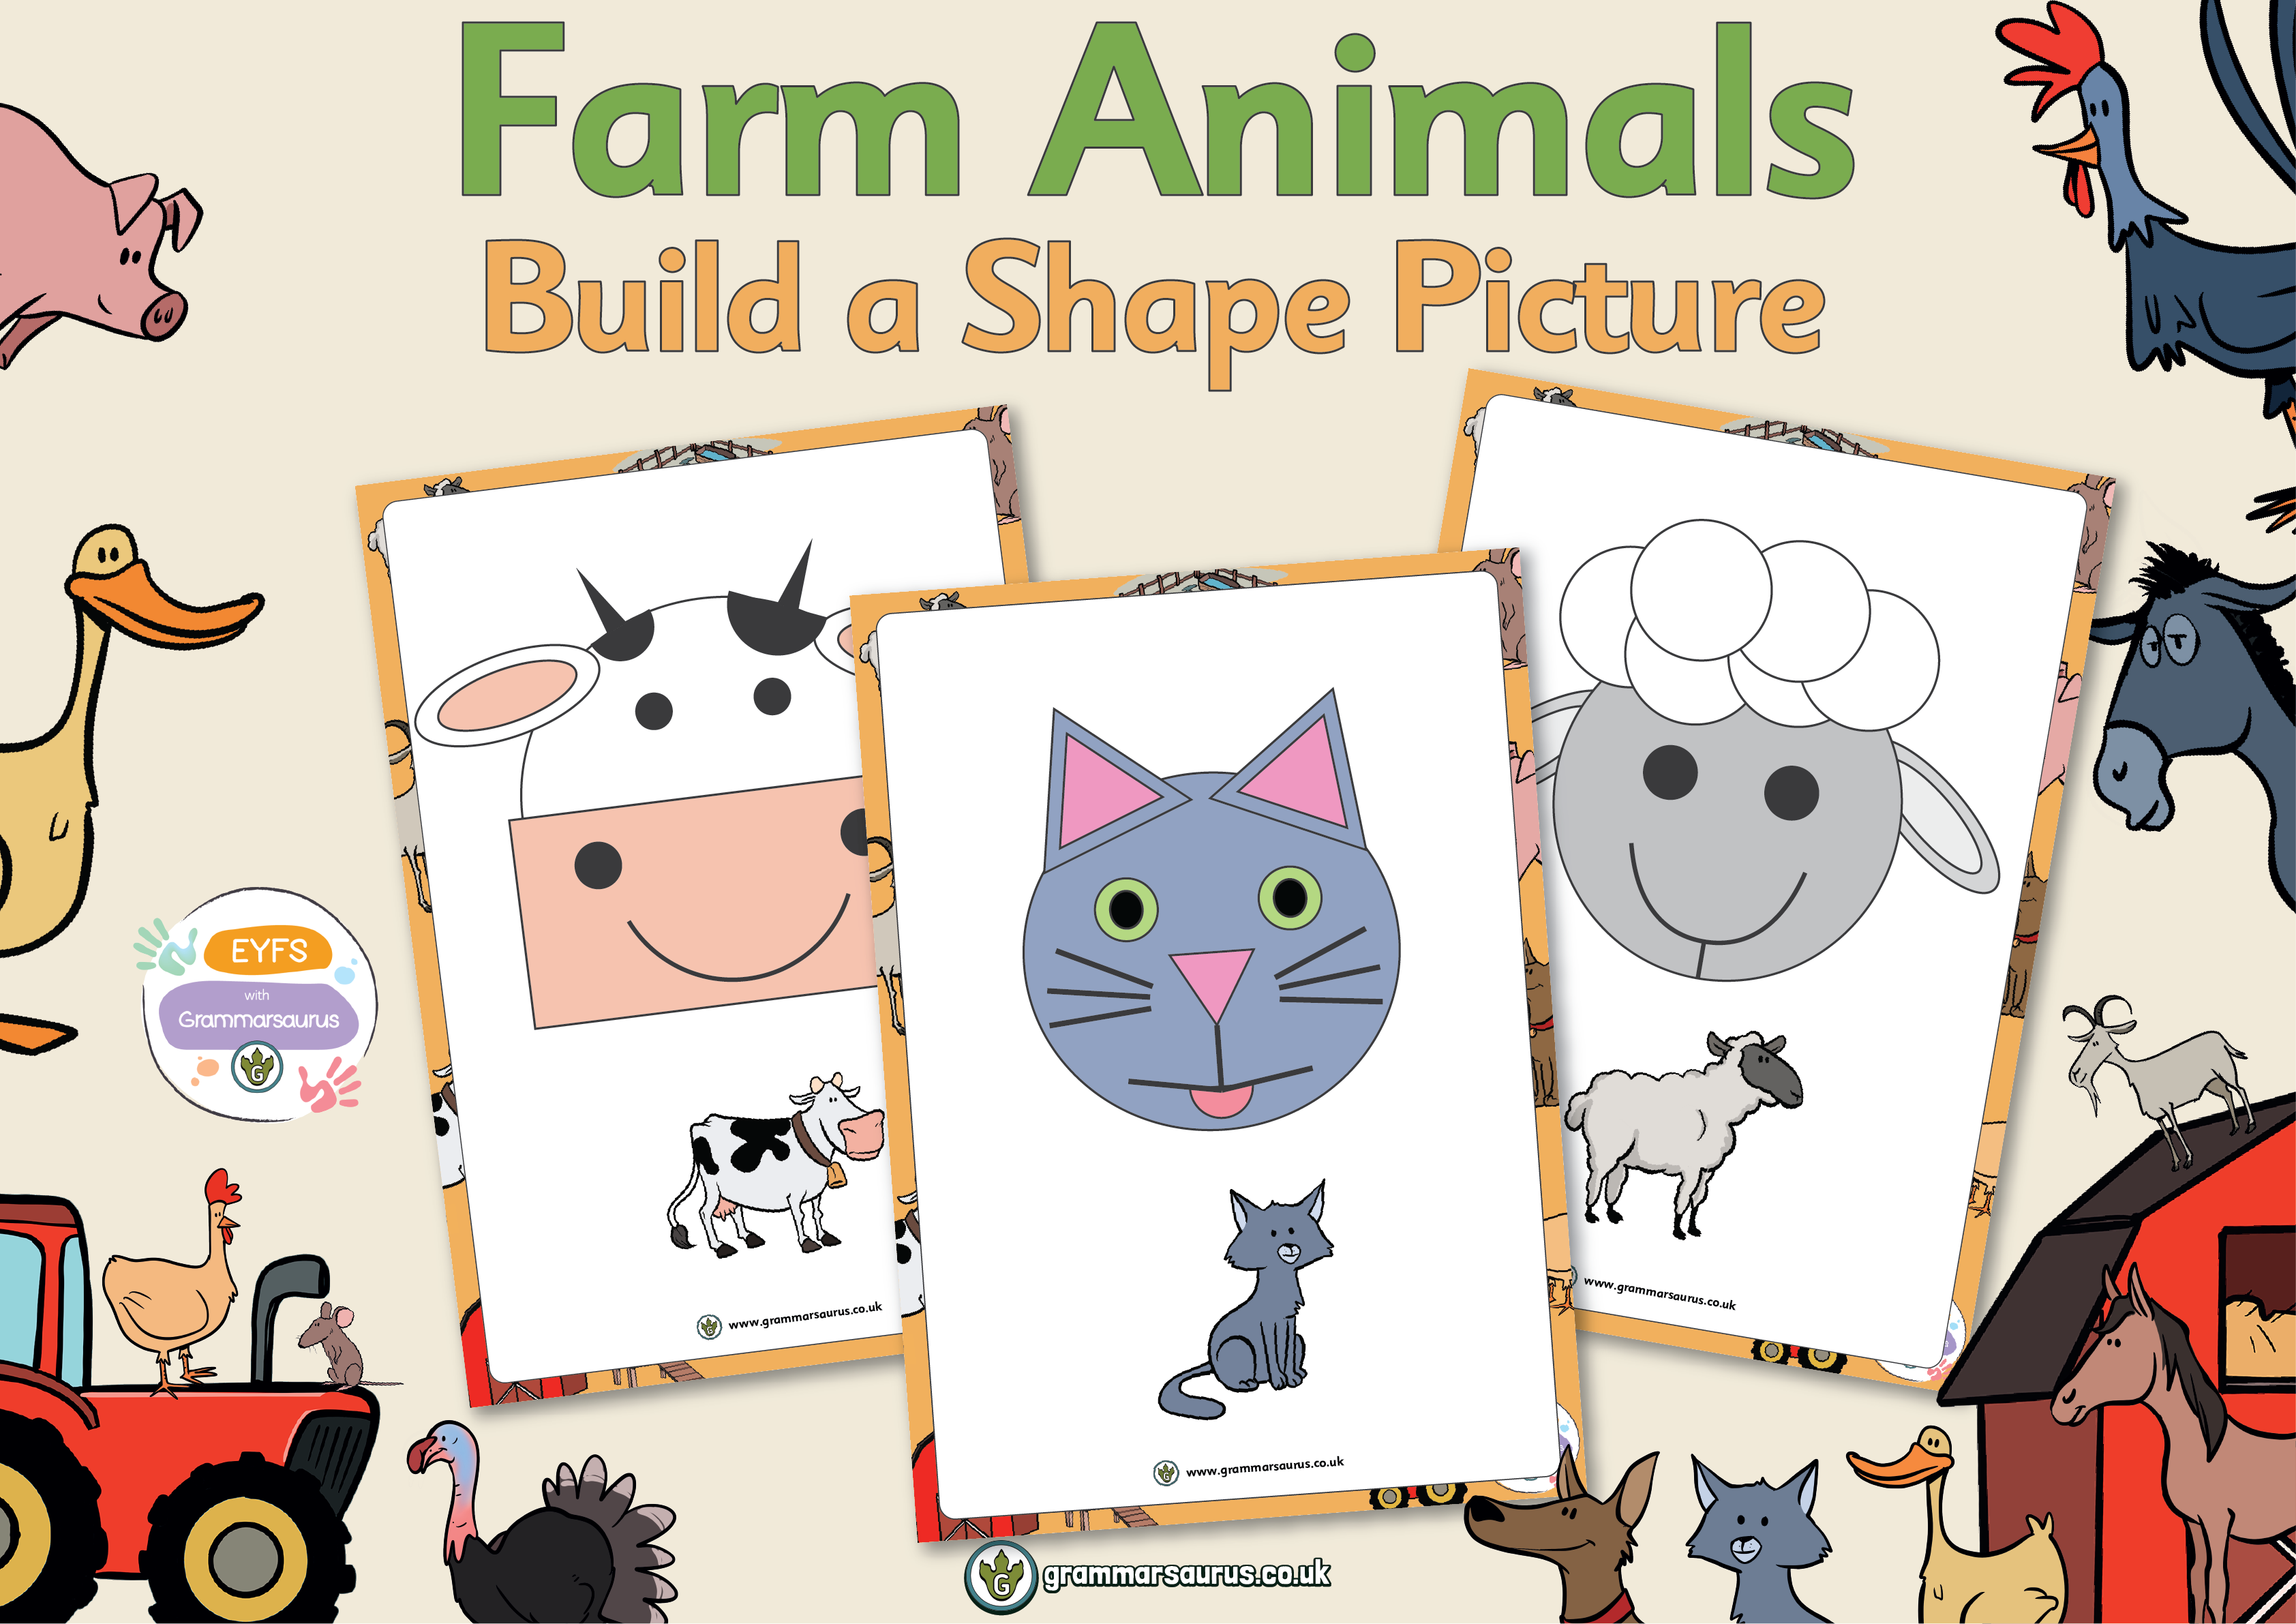 EYFS Farm Animals - Build a Shape Picture - Grammarsaurus